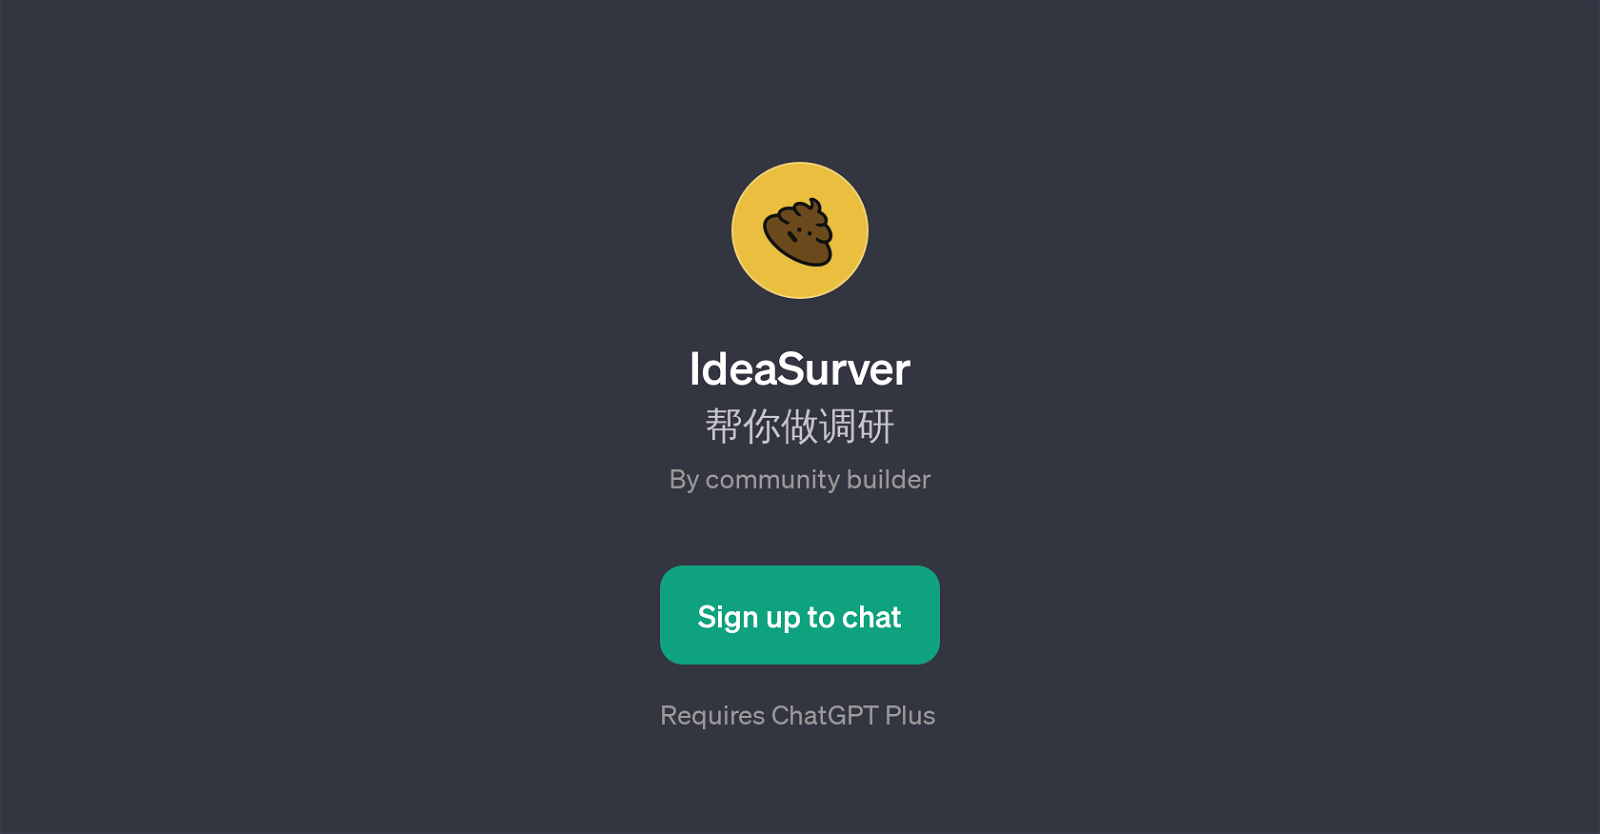 IdeaSurver website